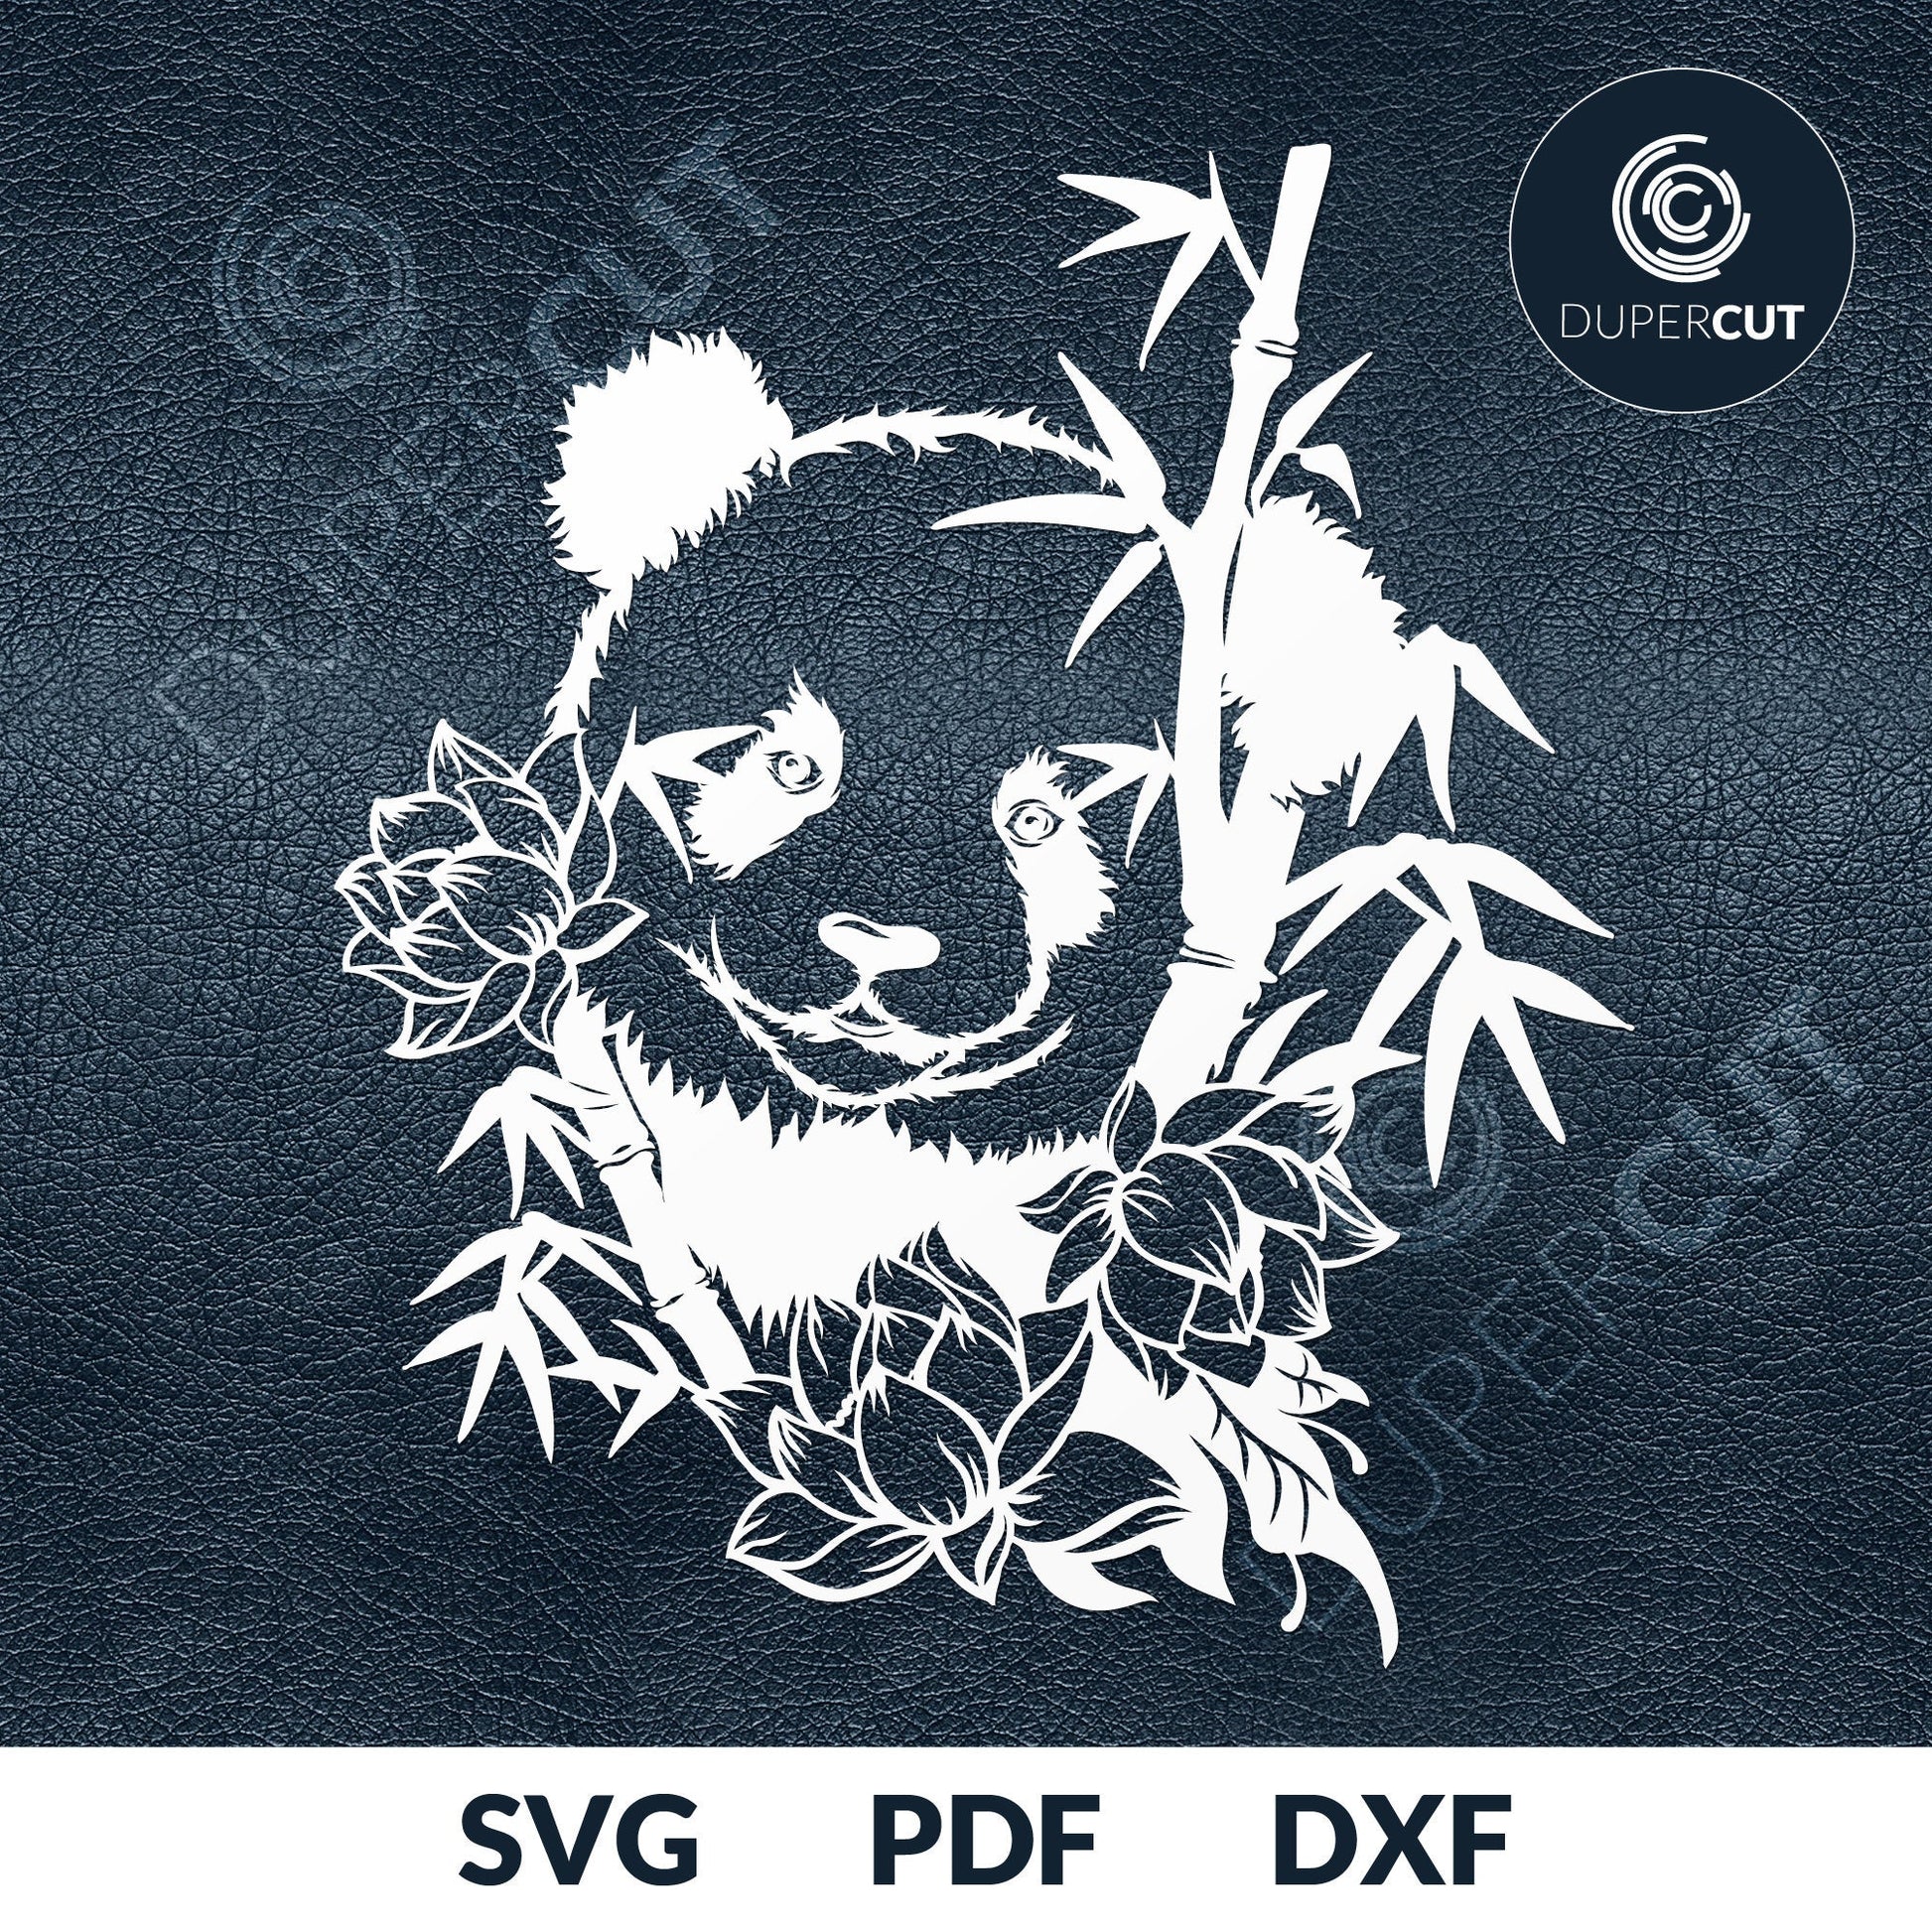 Bamboo panda black line drawing - SVG DXF JPEG files for CNC machines, laser cutting, Cricut, Silhouette Cameo, Glowforge engraving